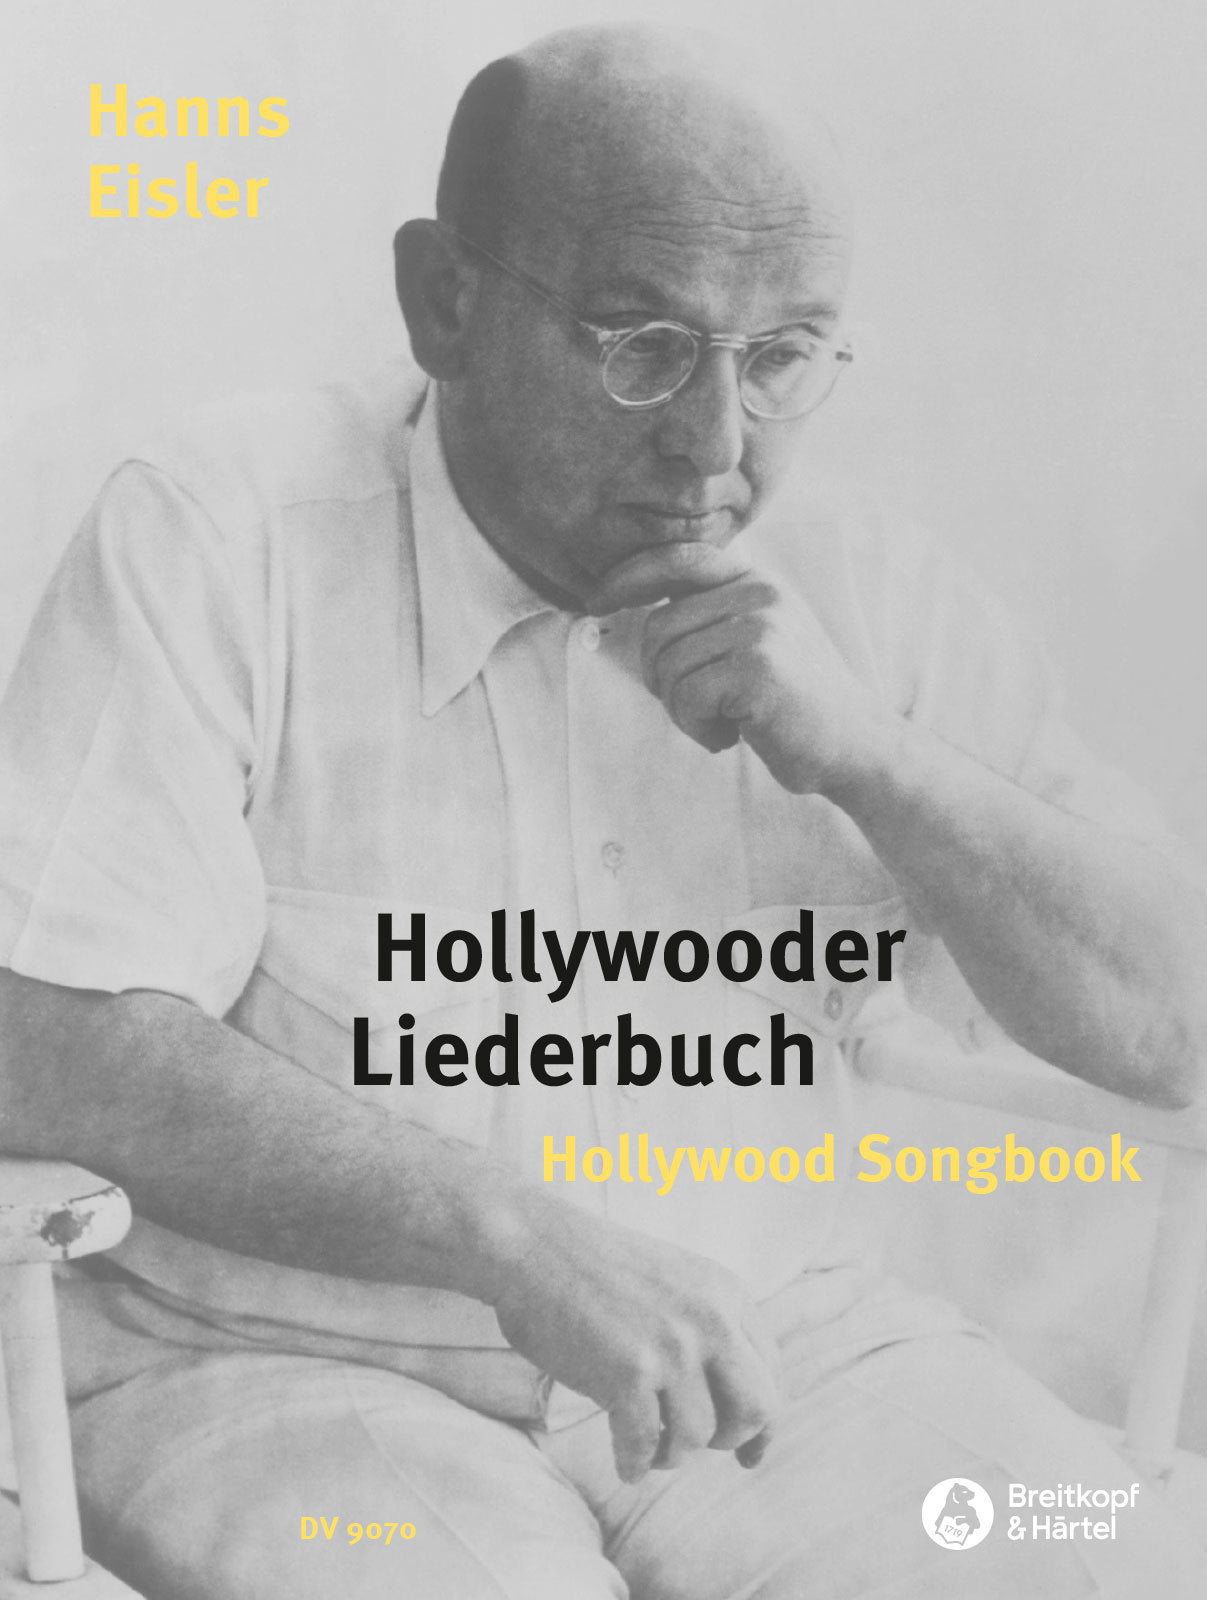 Eisler: Hollywooder Liederbuch (Hollywood Songbook)